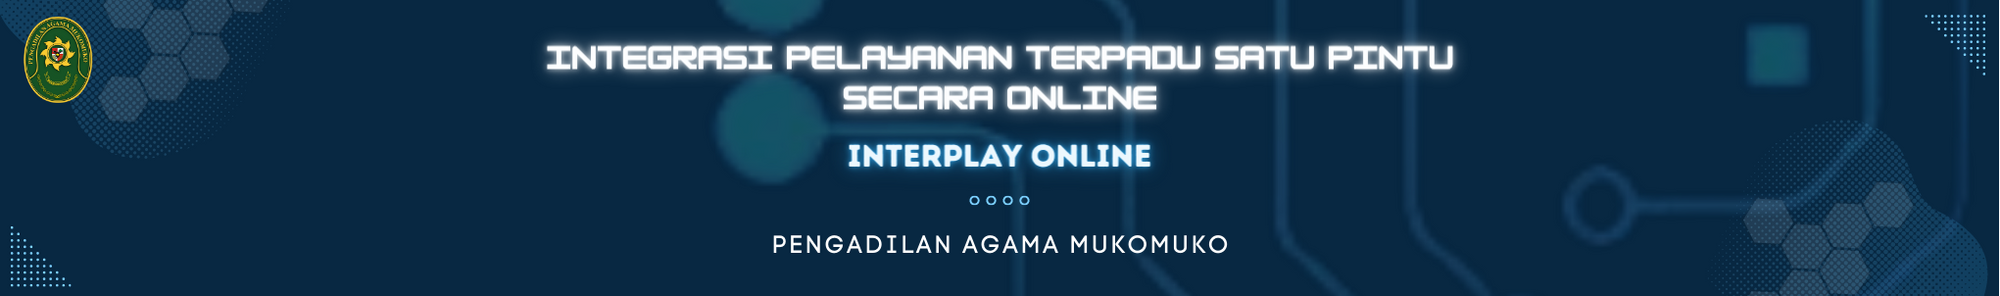 Interplay Online PAMKM